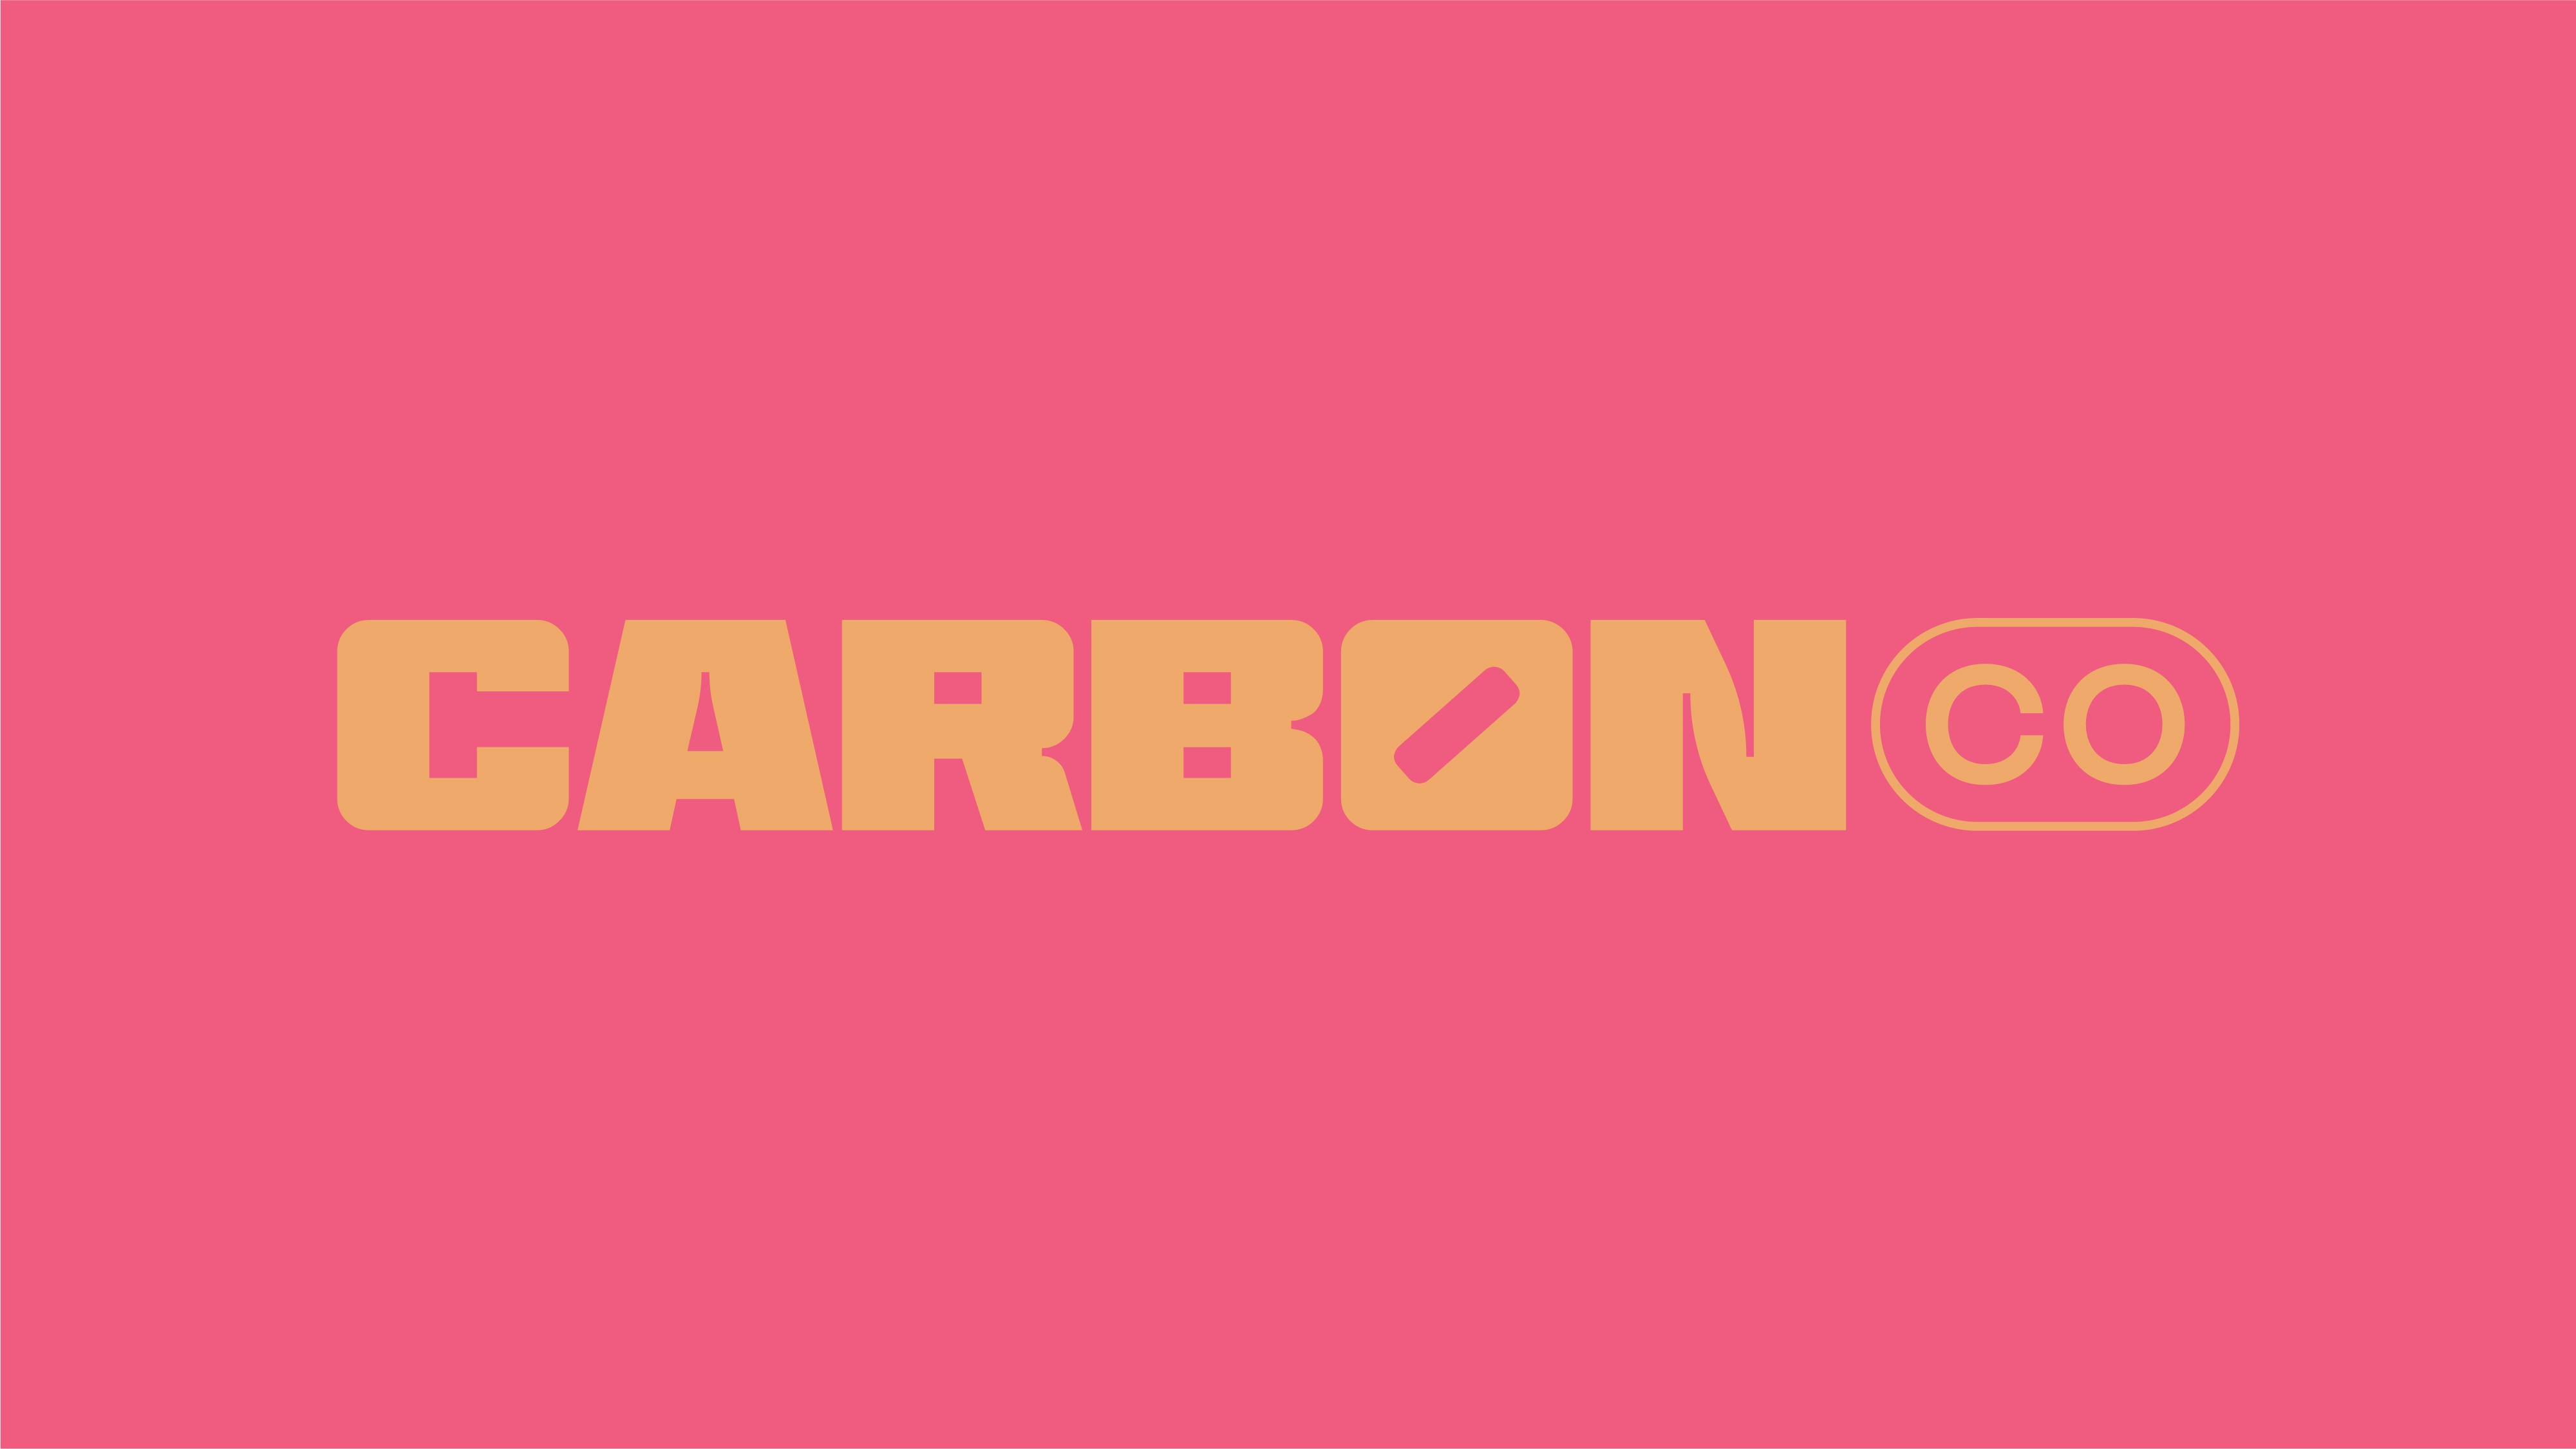 GMK_2021_BERK_Carbon_CoArtboard 1 copy 26@150x-100